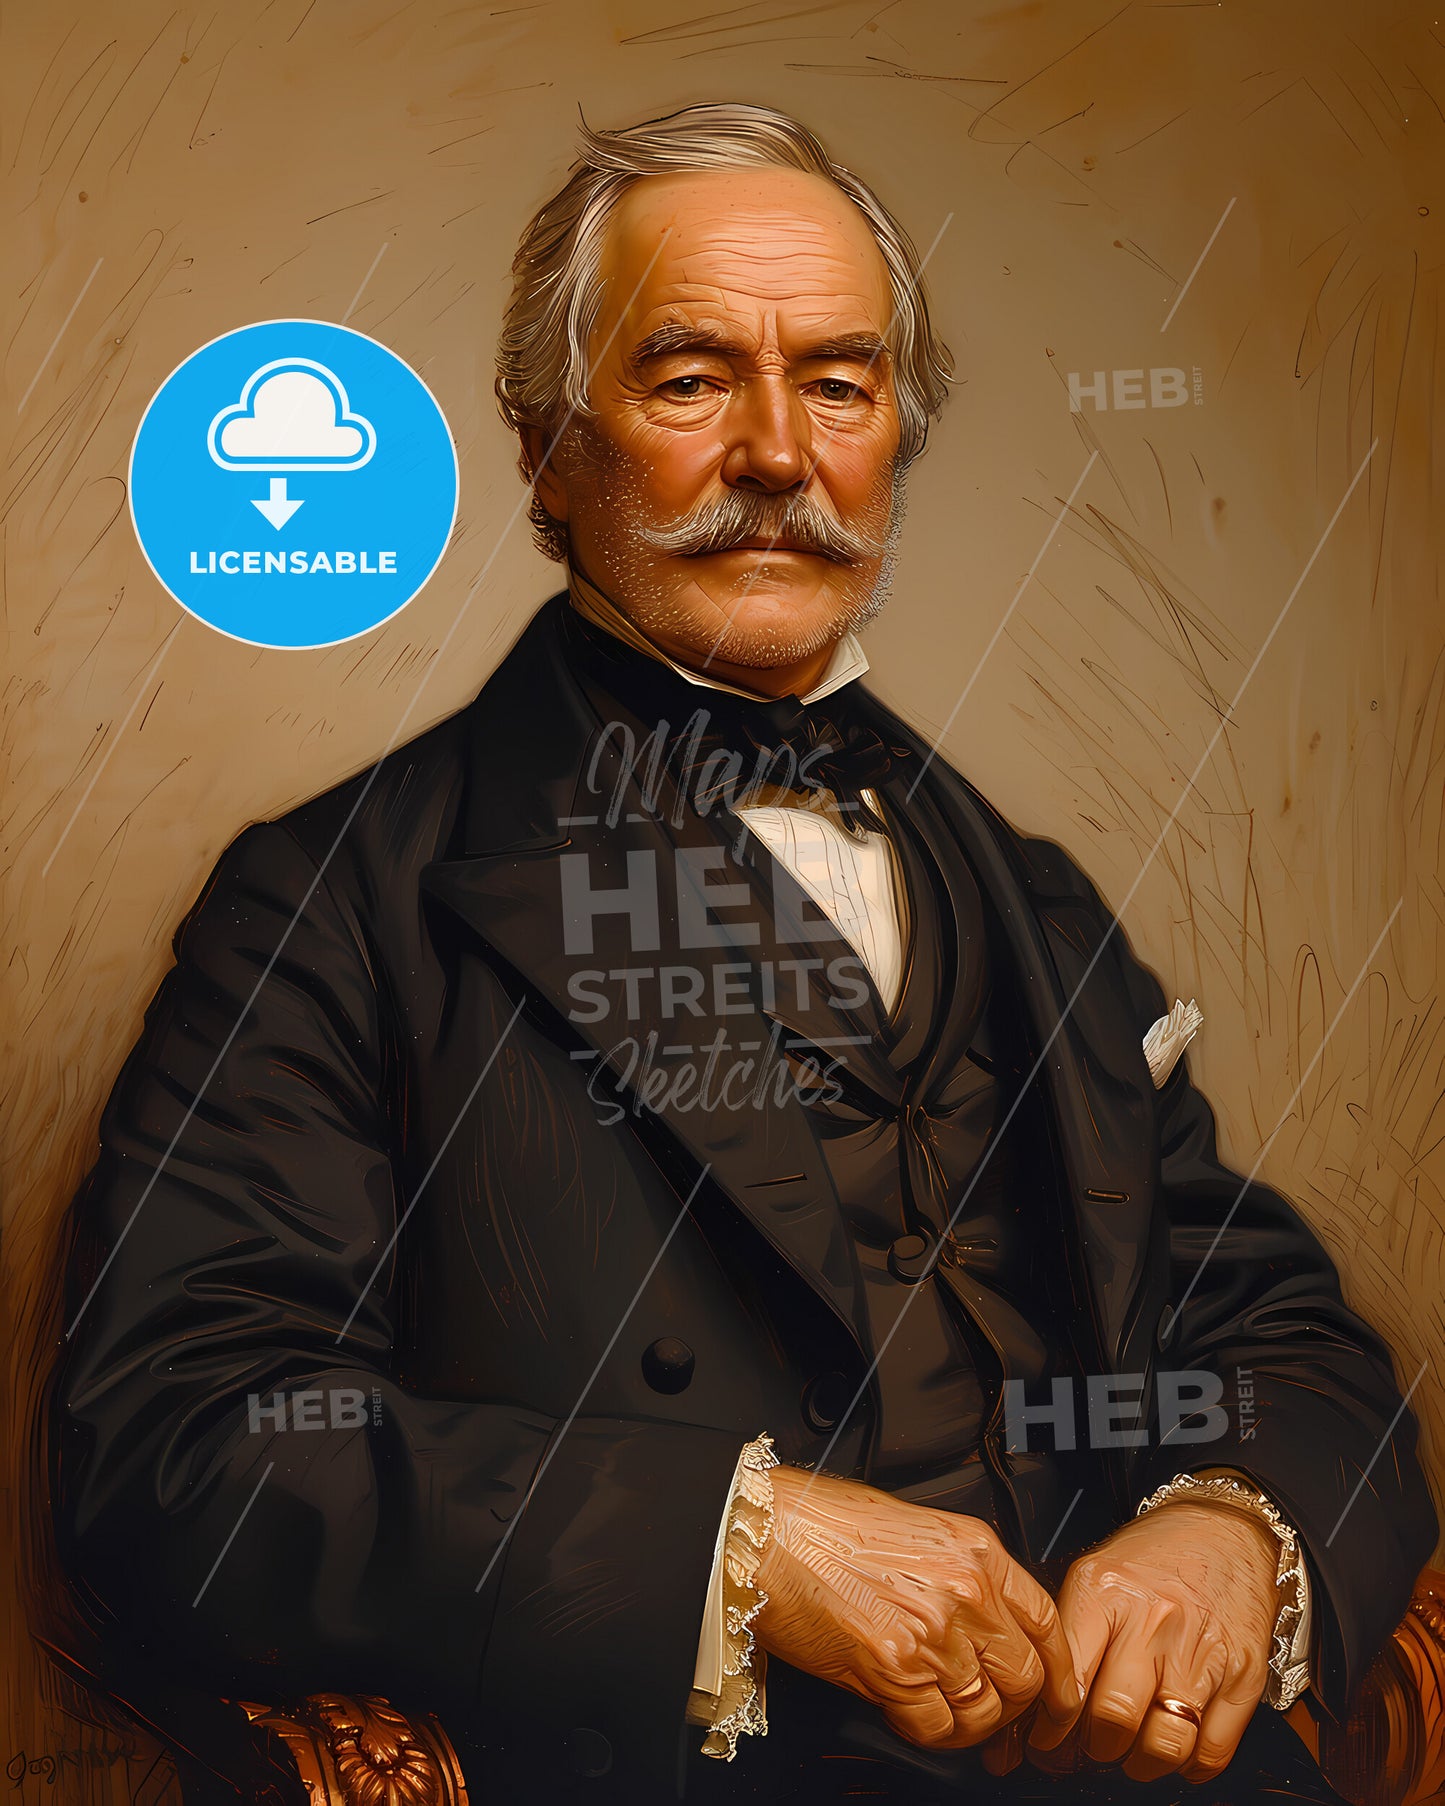 John Franklin, Jameson, 1859 - 1937, a man in a suit